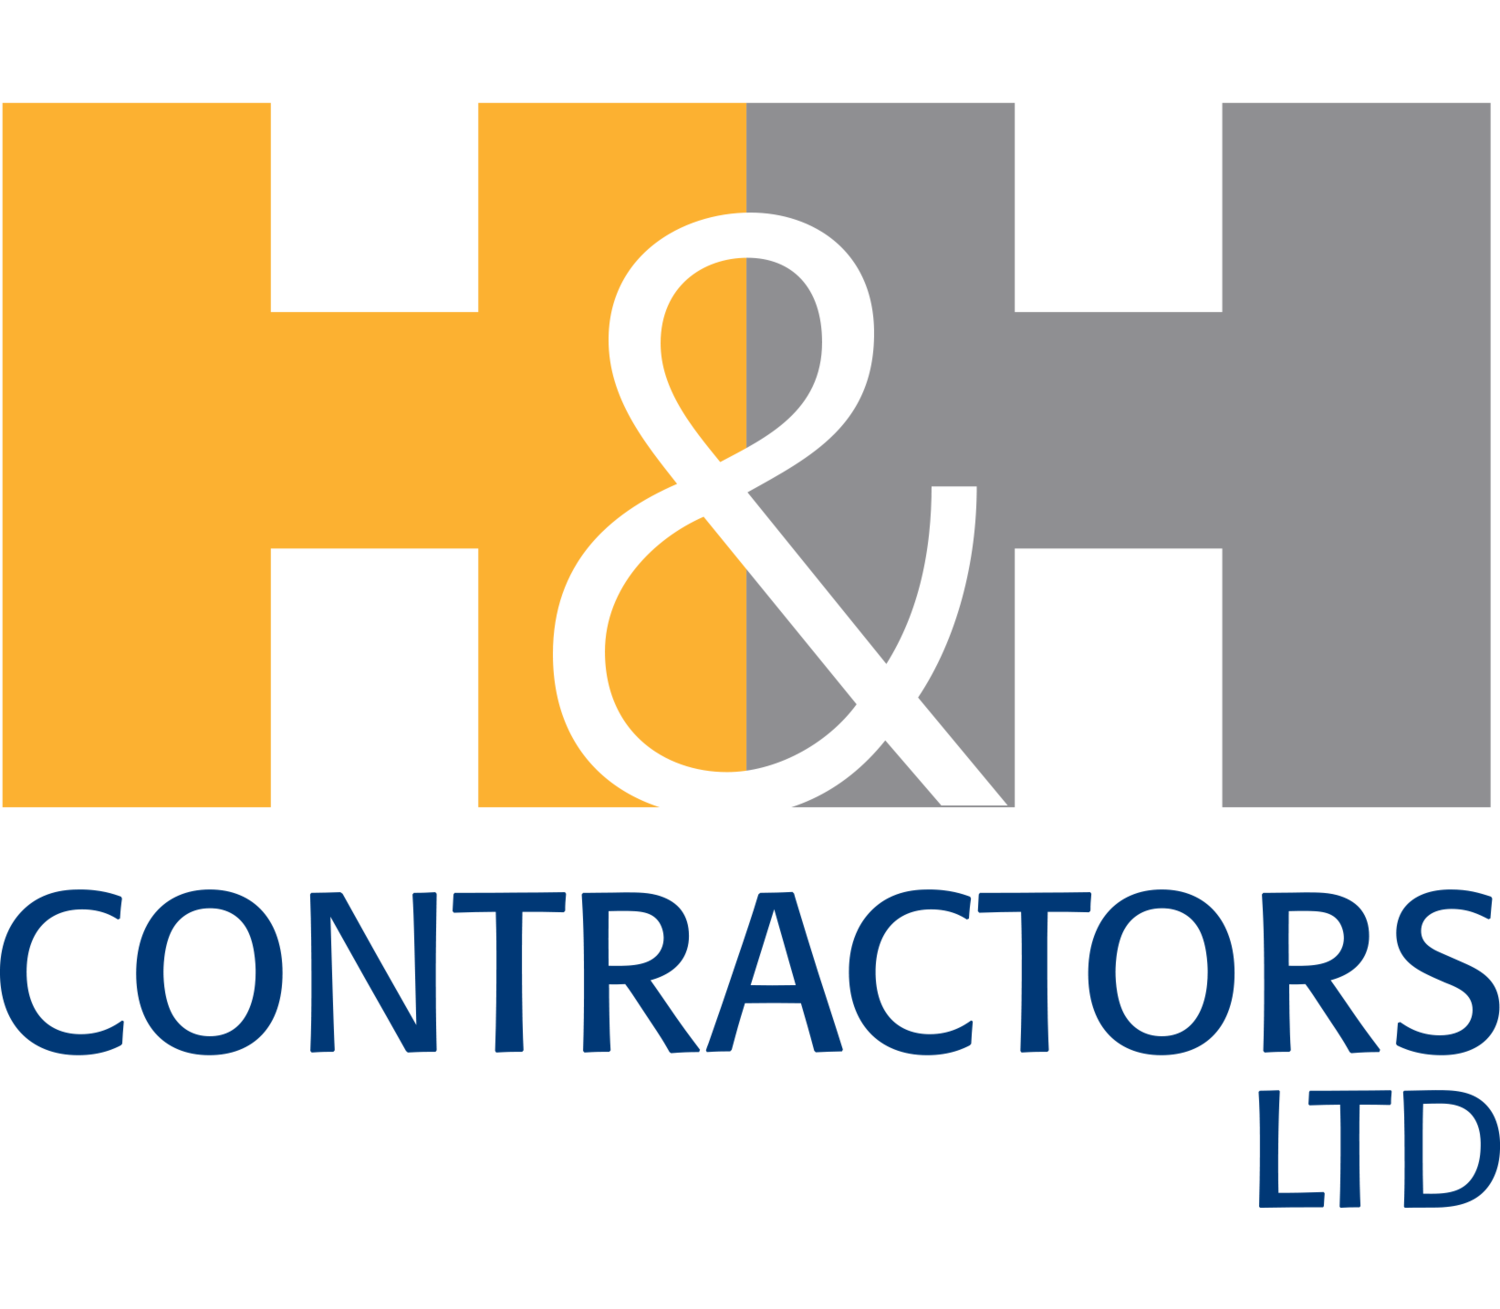 H&amp;H Contractors